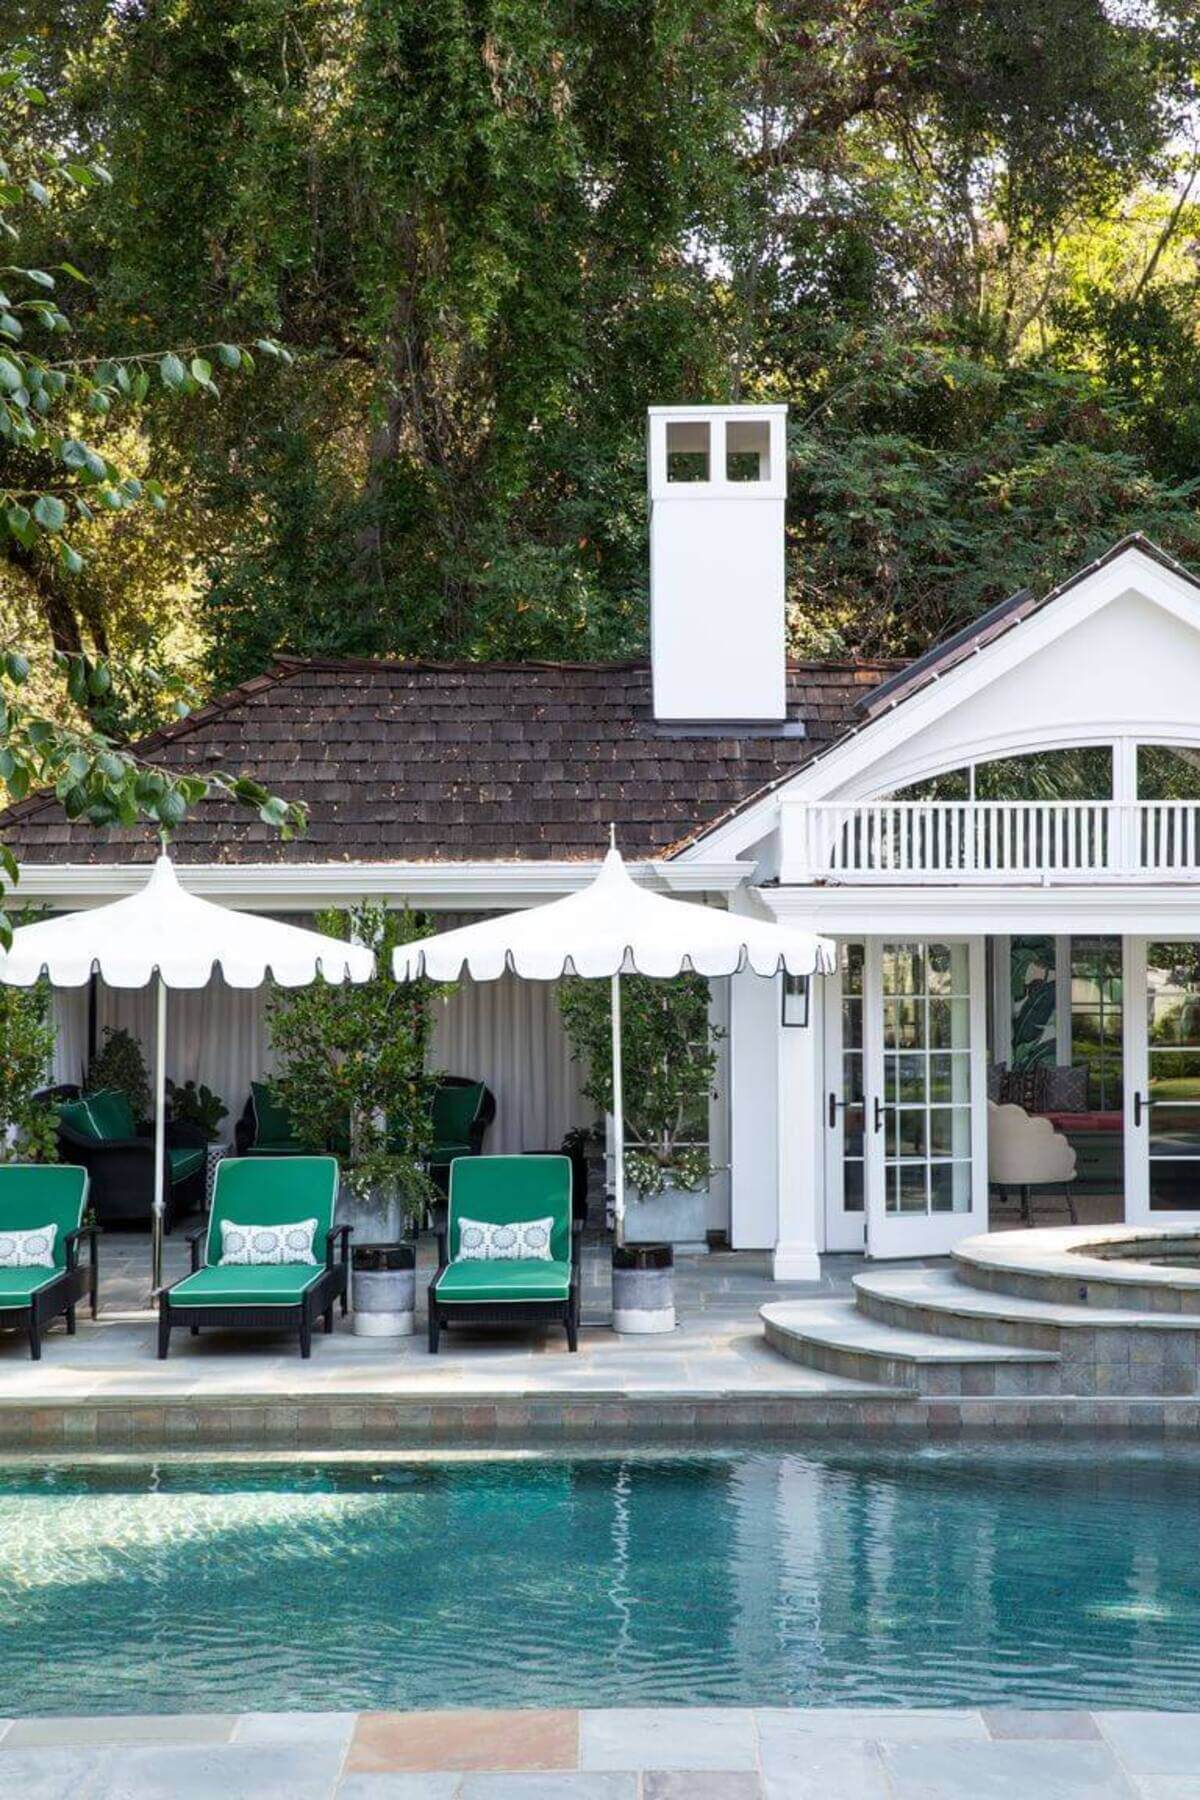 Chloe Warner designed a resort-style home in California